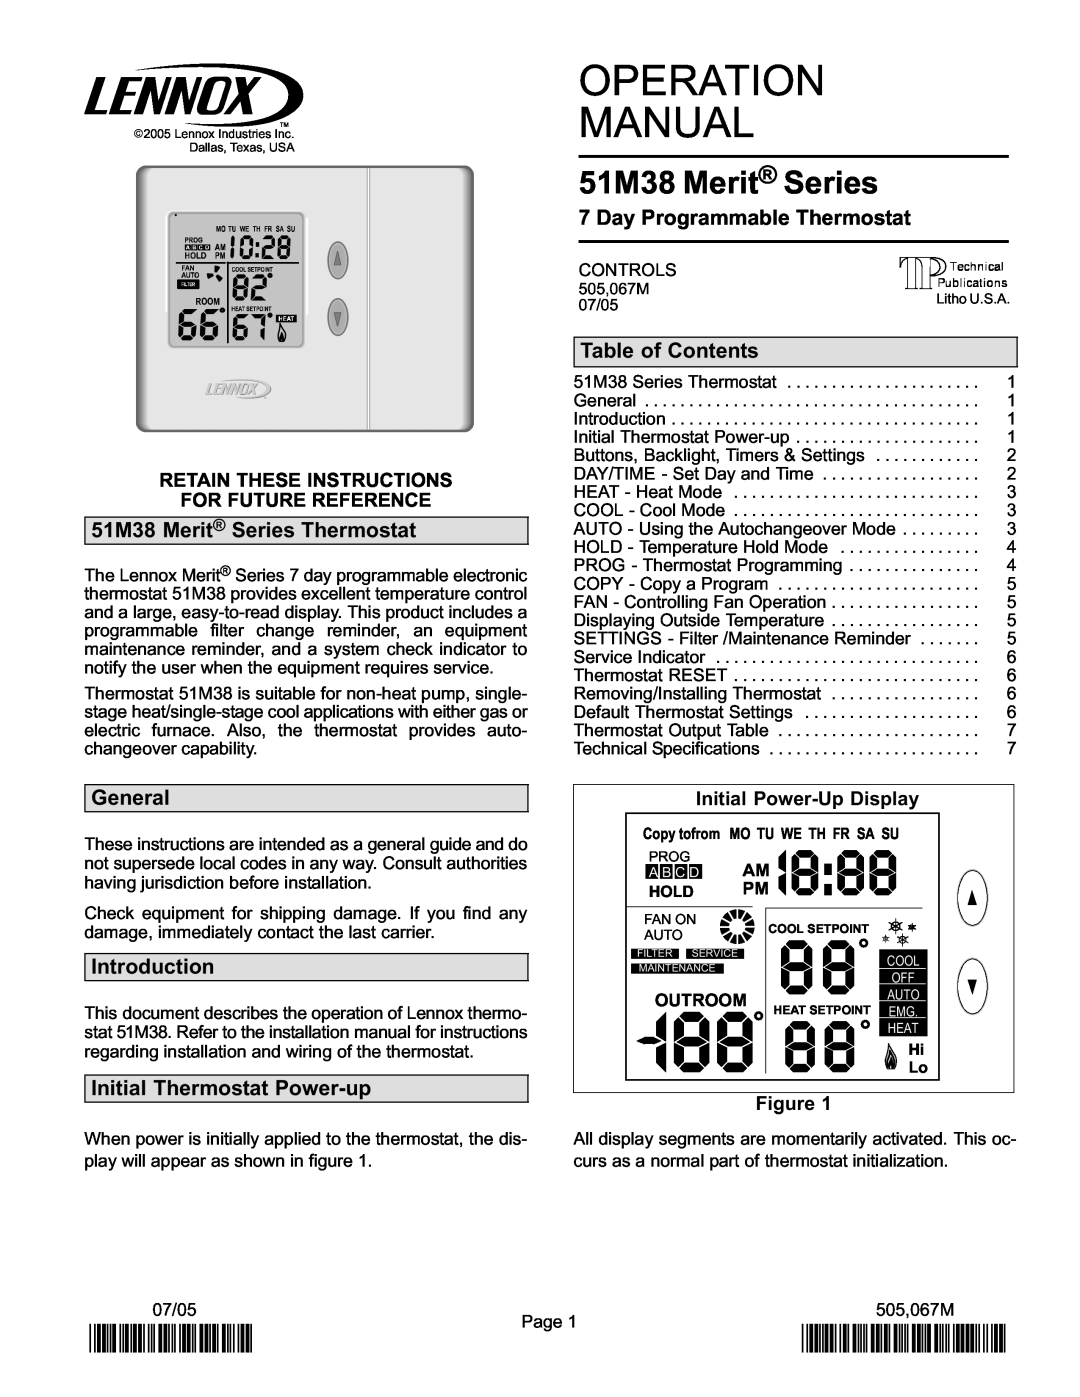 Lennox International Inc 51M37 P505067M, 51M38 Merit Series Thermostat, Pm, 2P0705, Day Programmable Thermostat 